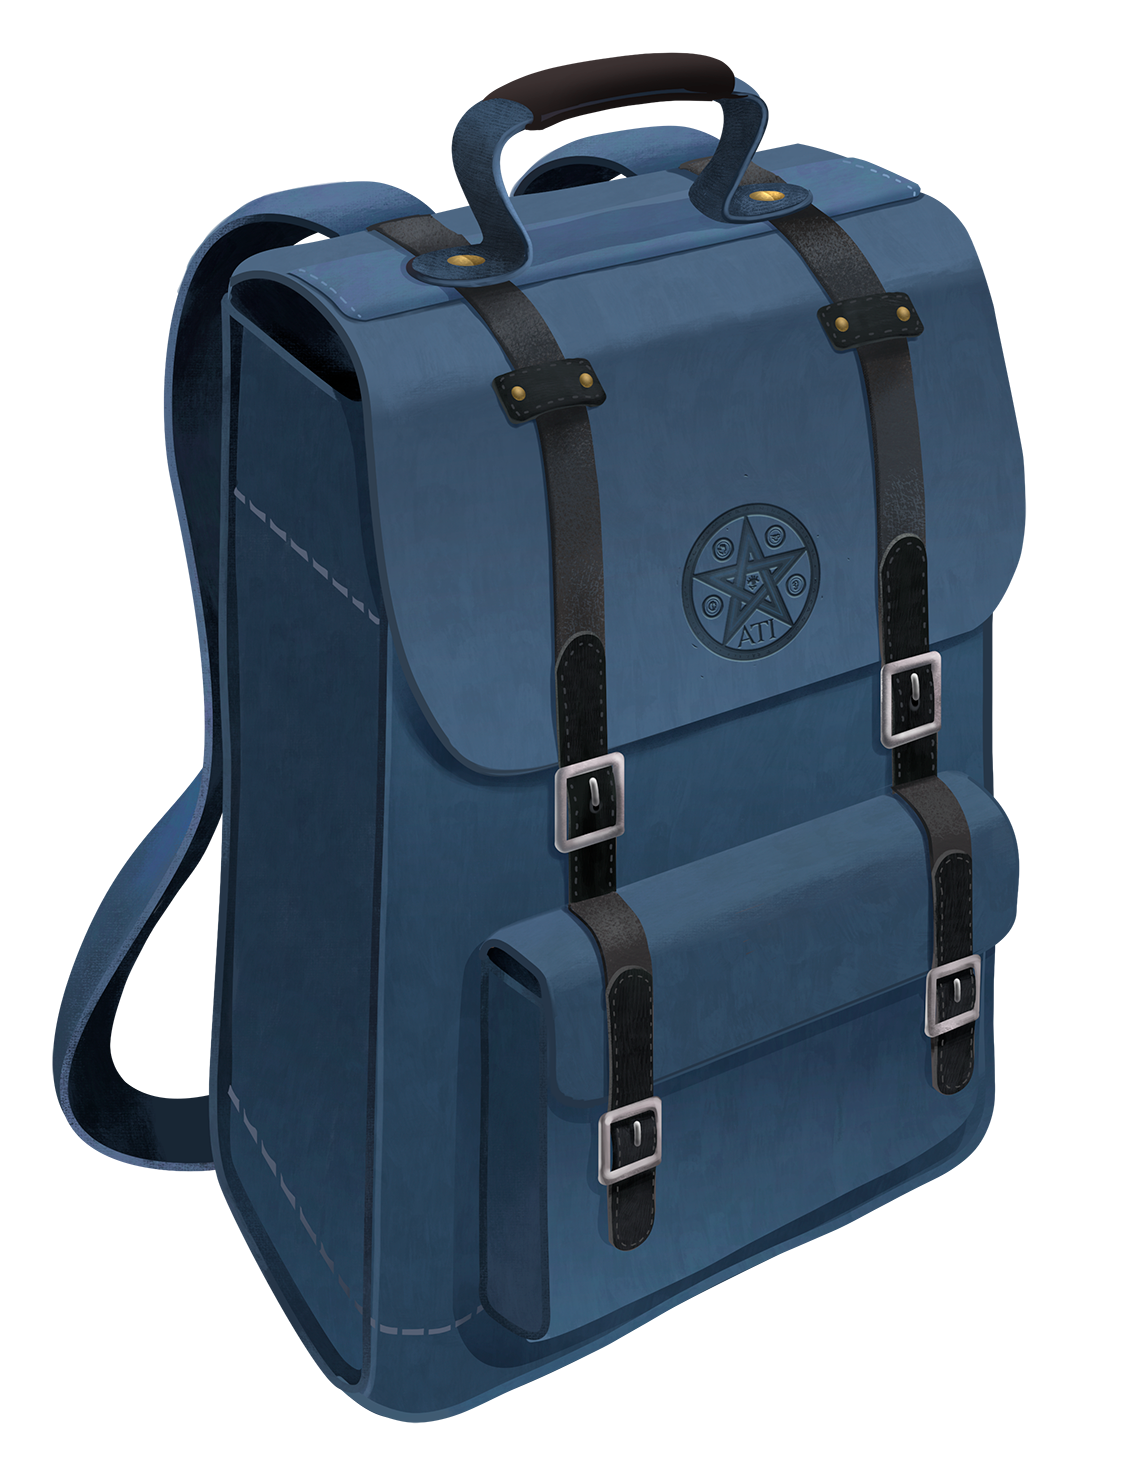 Dark blue satchel with star emblem inlaid on top flap